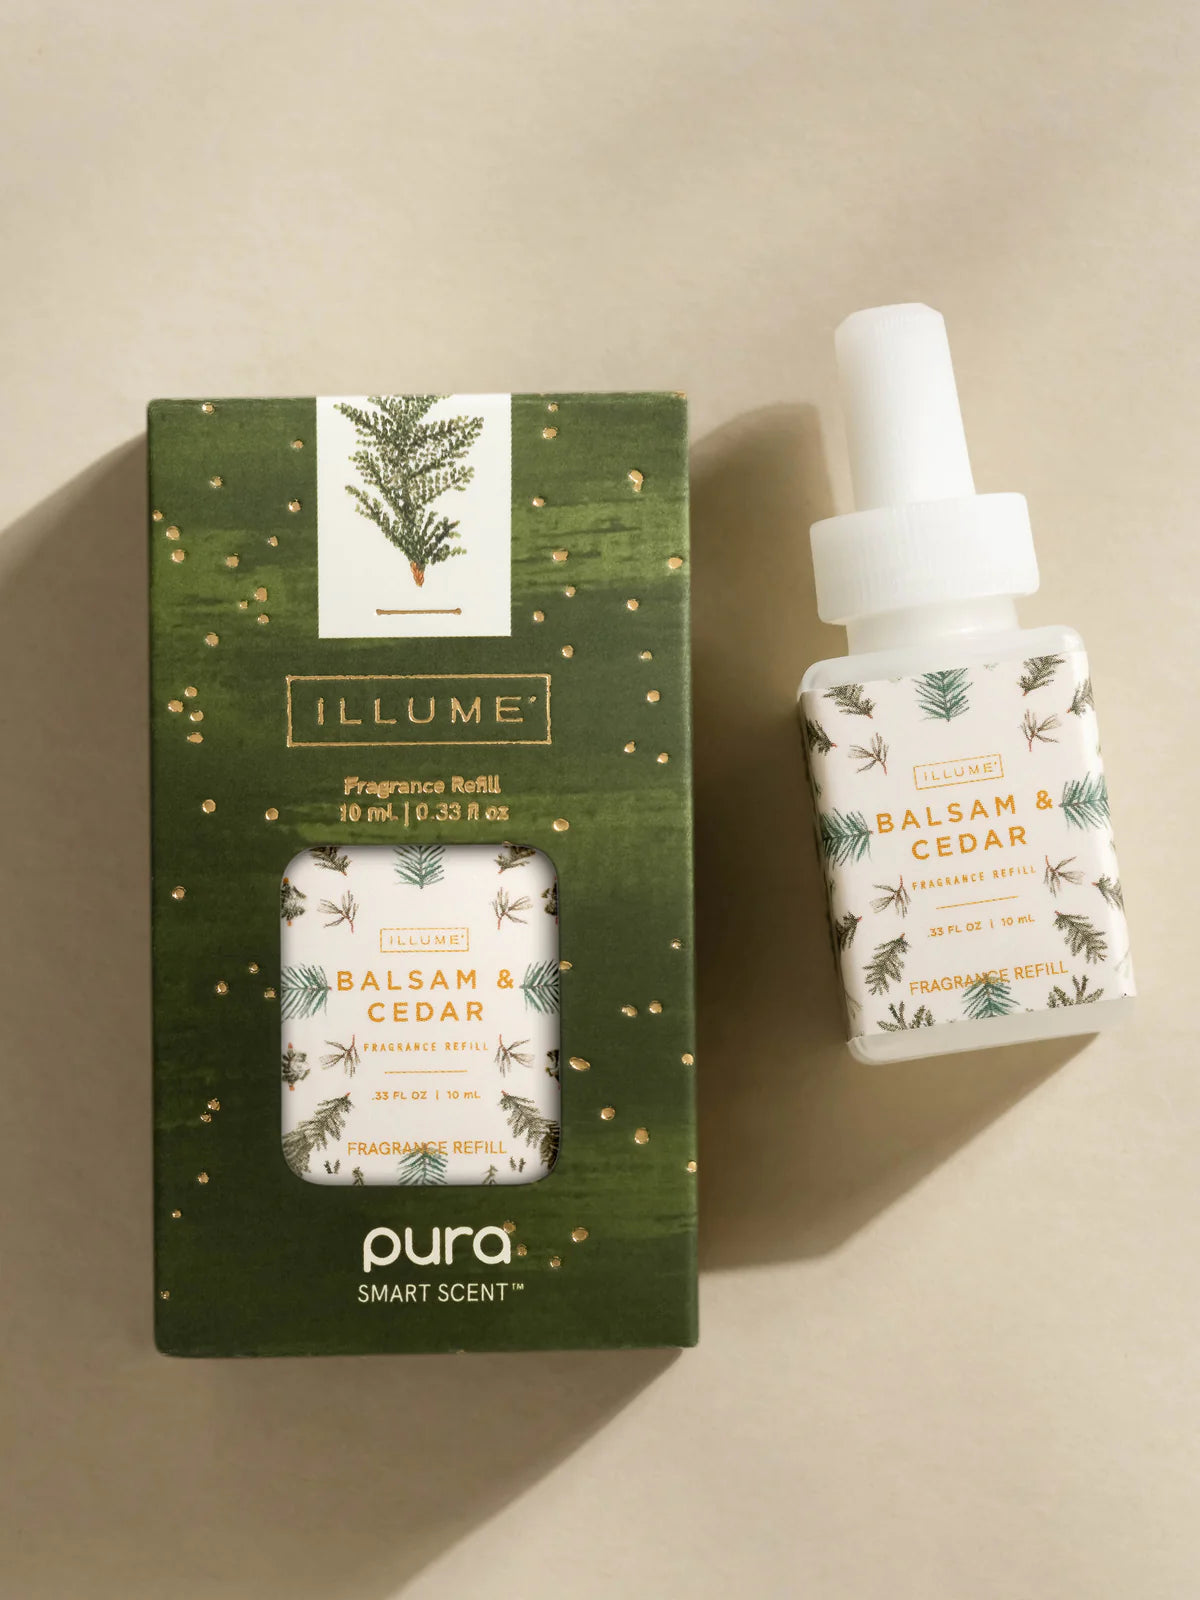 Pura Scent Balsam & Cedar by Illume